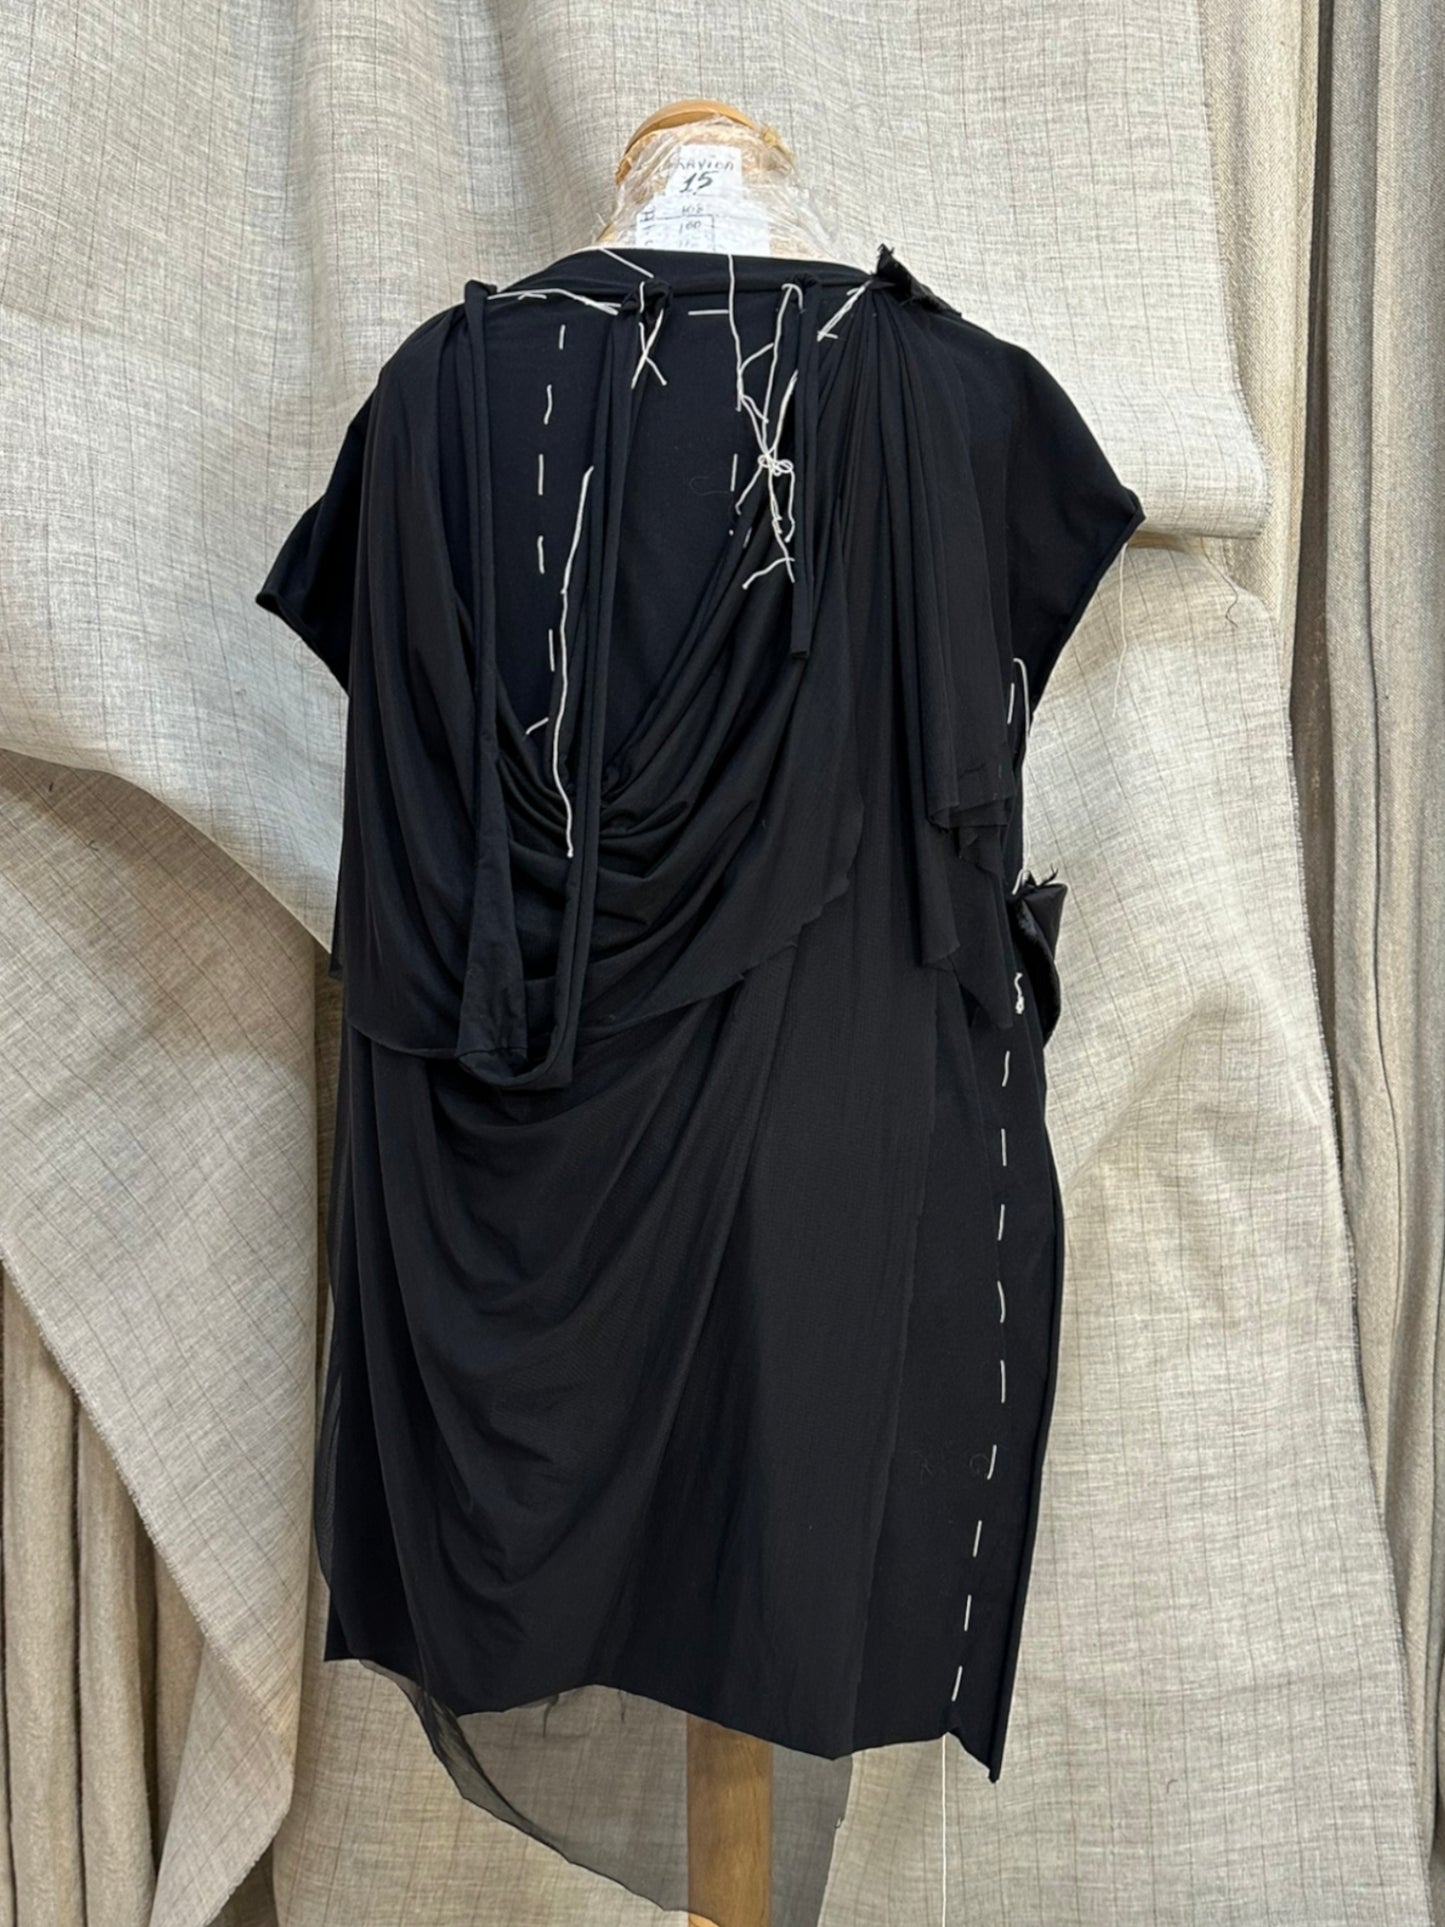 Black Asymmetrical Top With Handmade Decorative Stitching